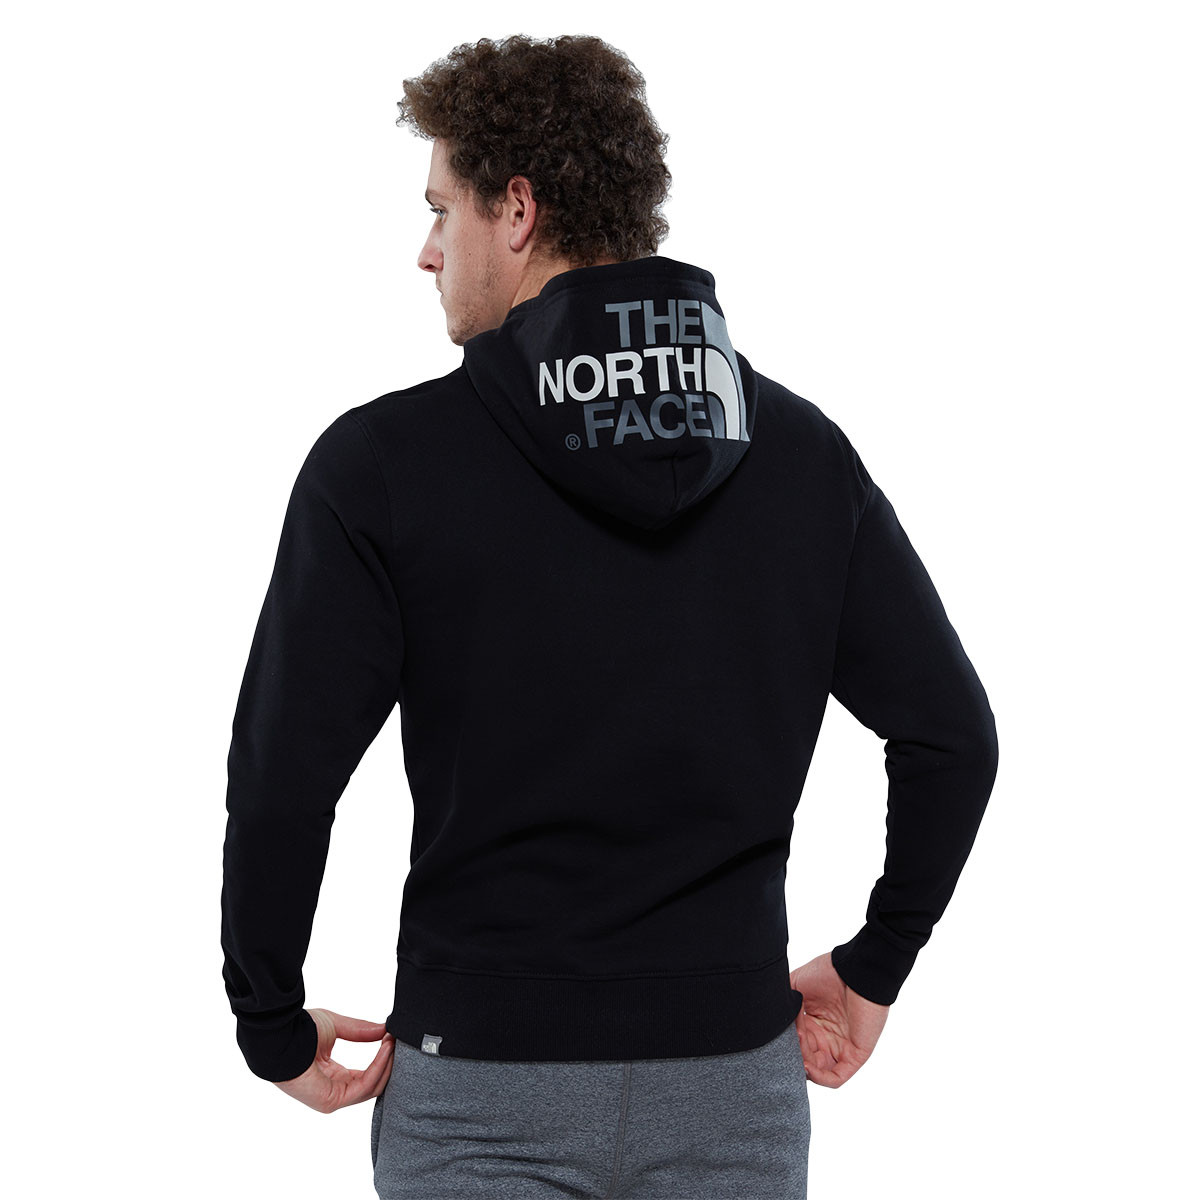 The North Face Sweatshirt Seasonal The Negozio Face Drew Peak North Black 